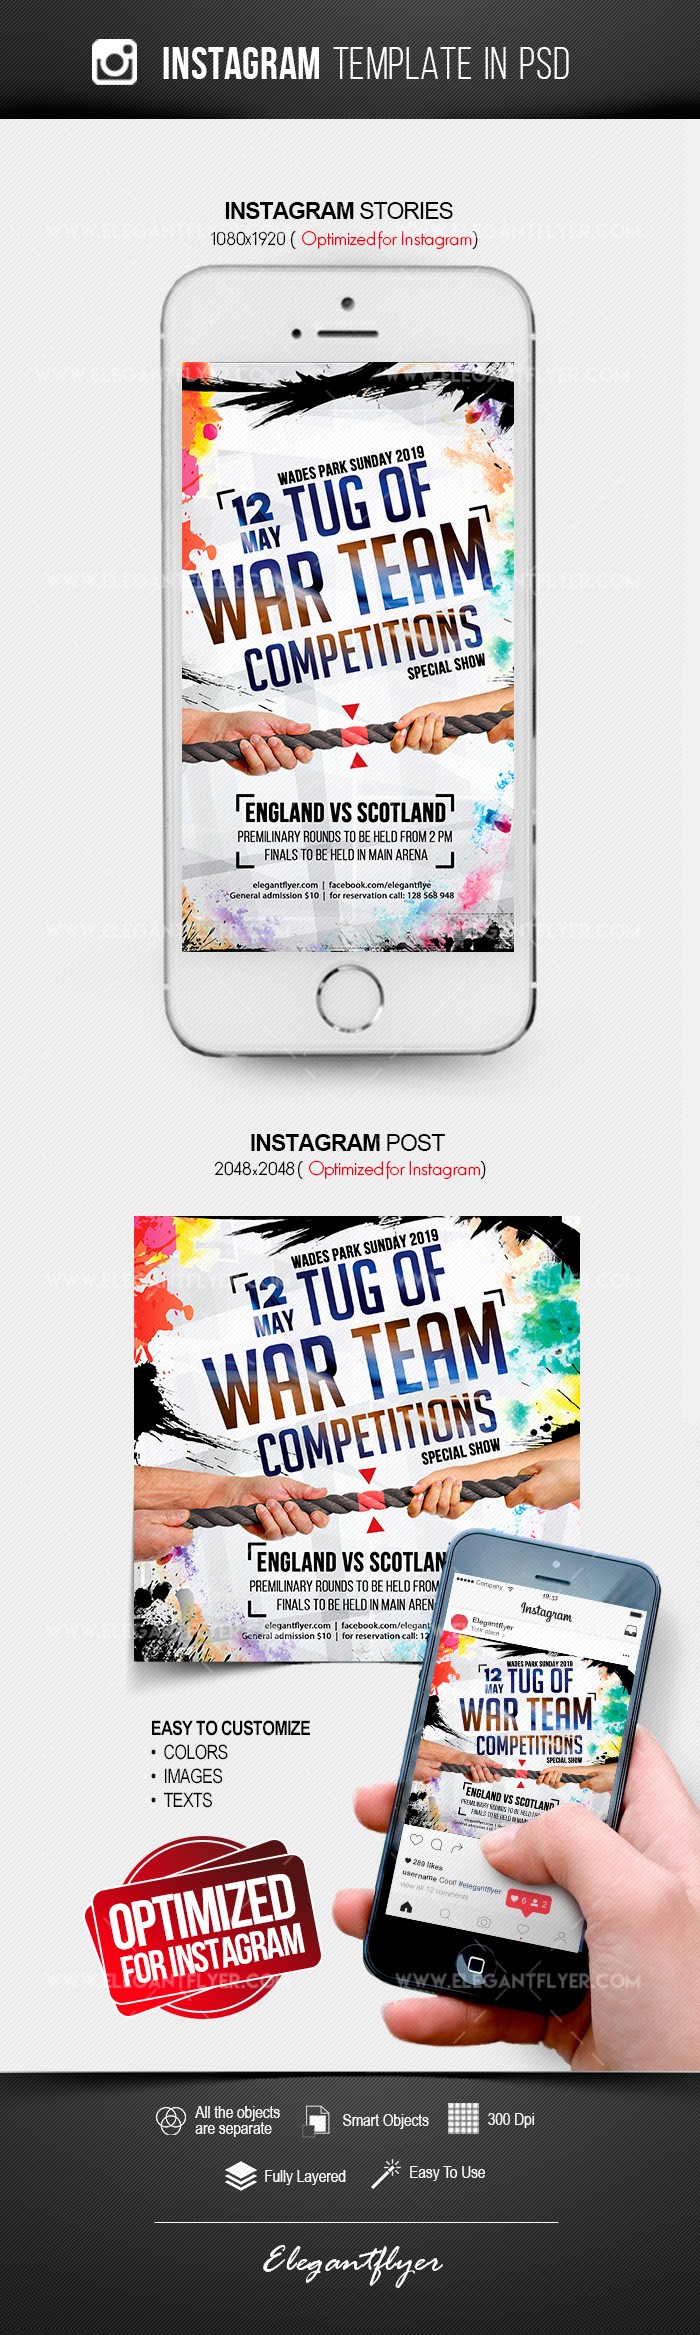 Tug of War Team Competitions Instagram by ElegantFlyer